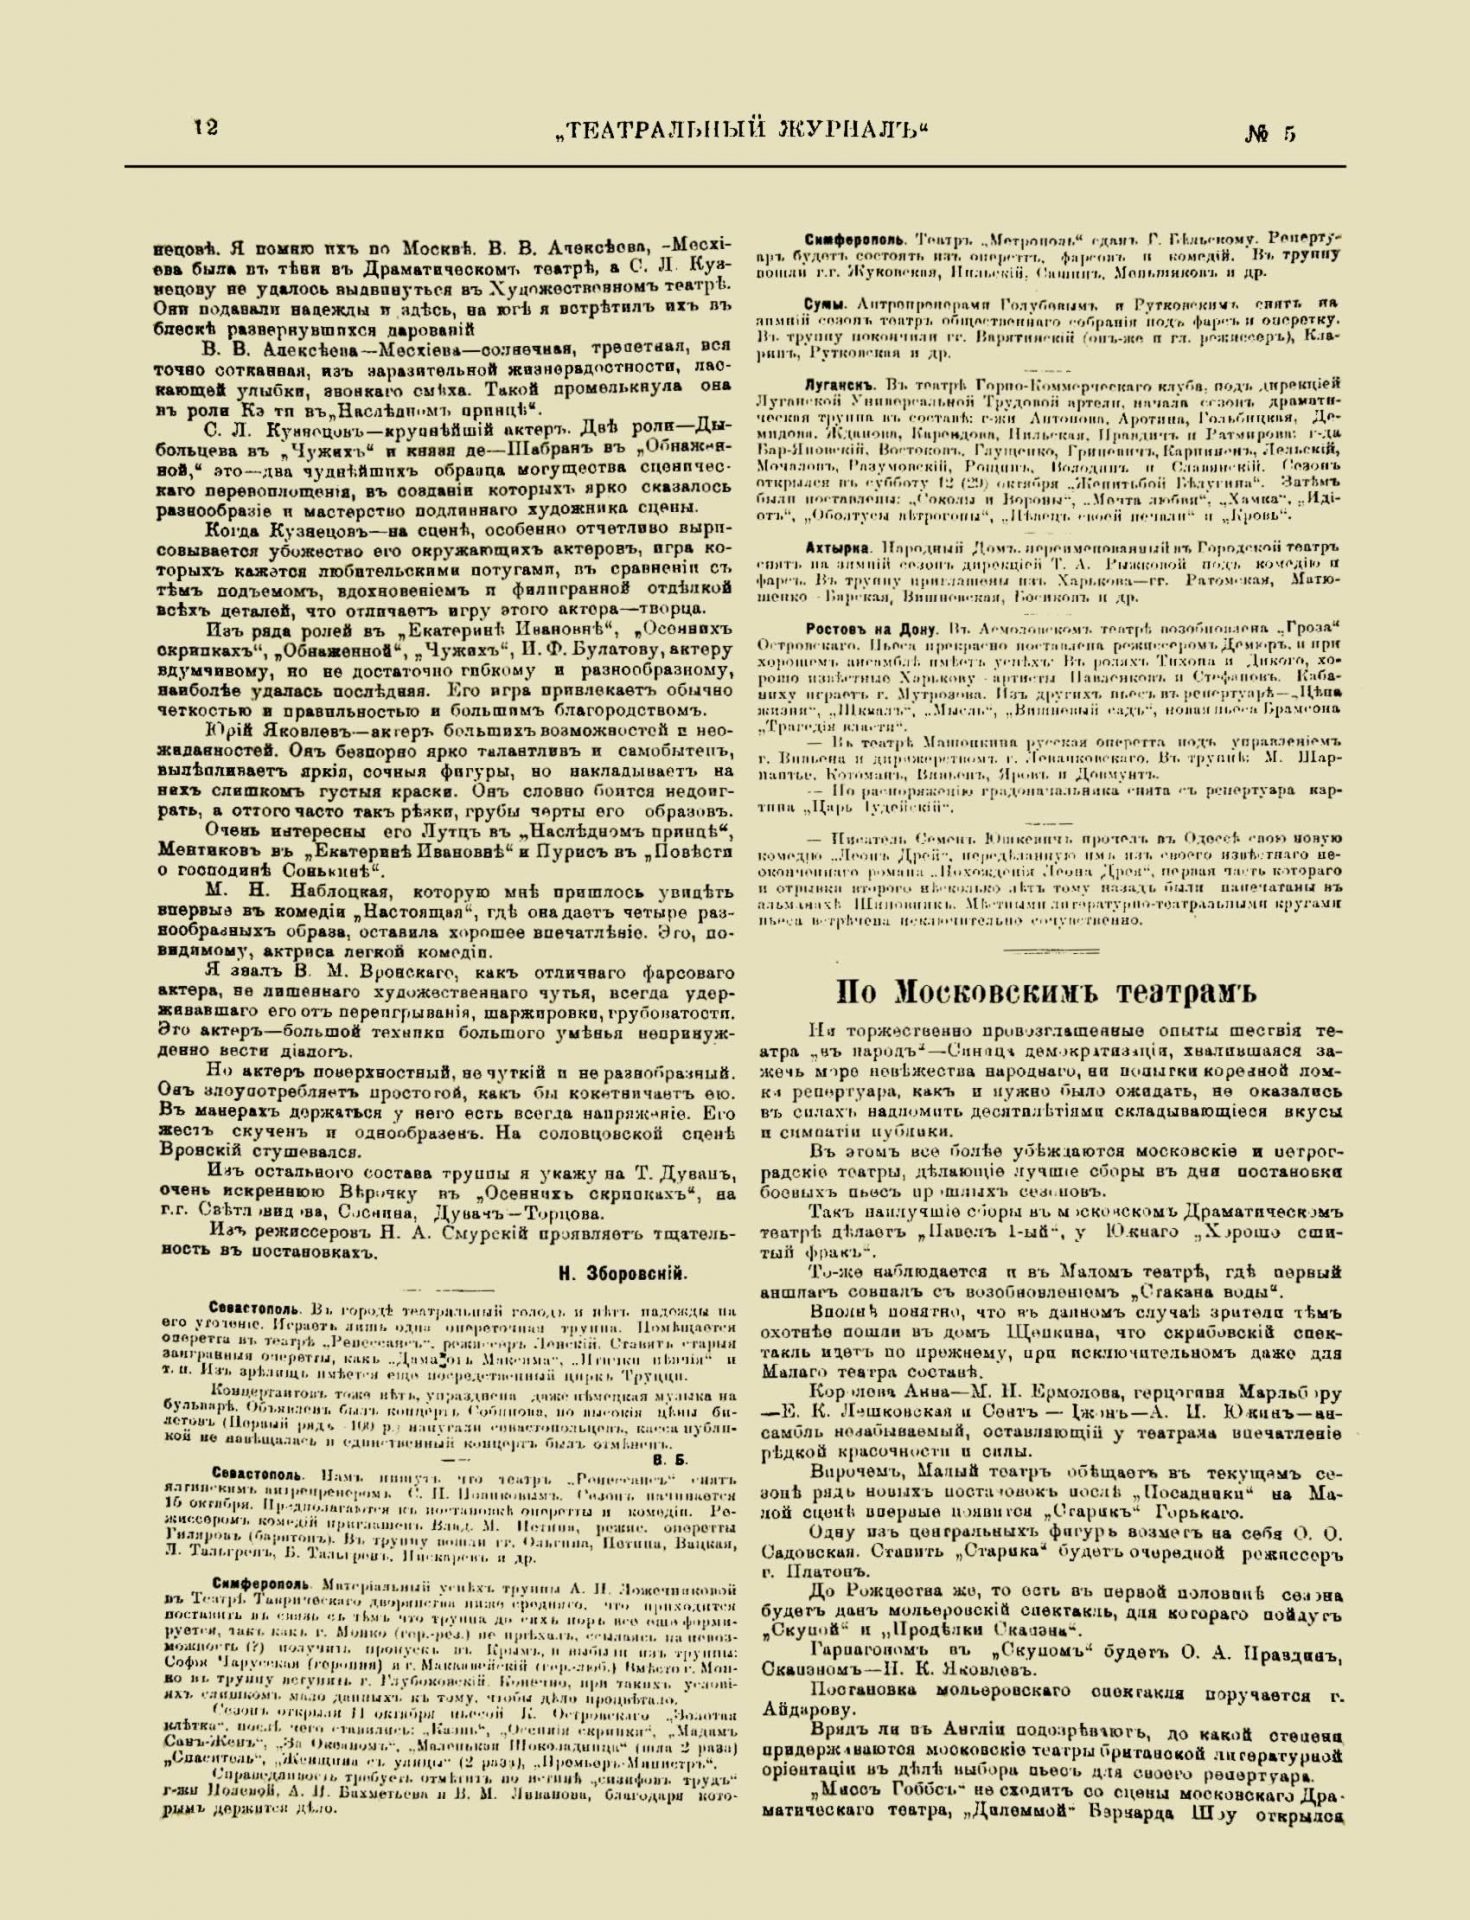 Театральный журнал_1918_№5